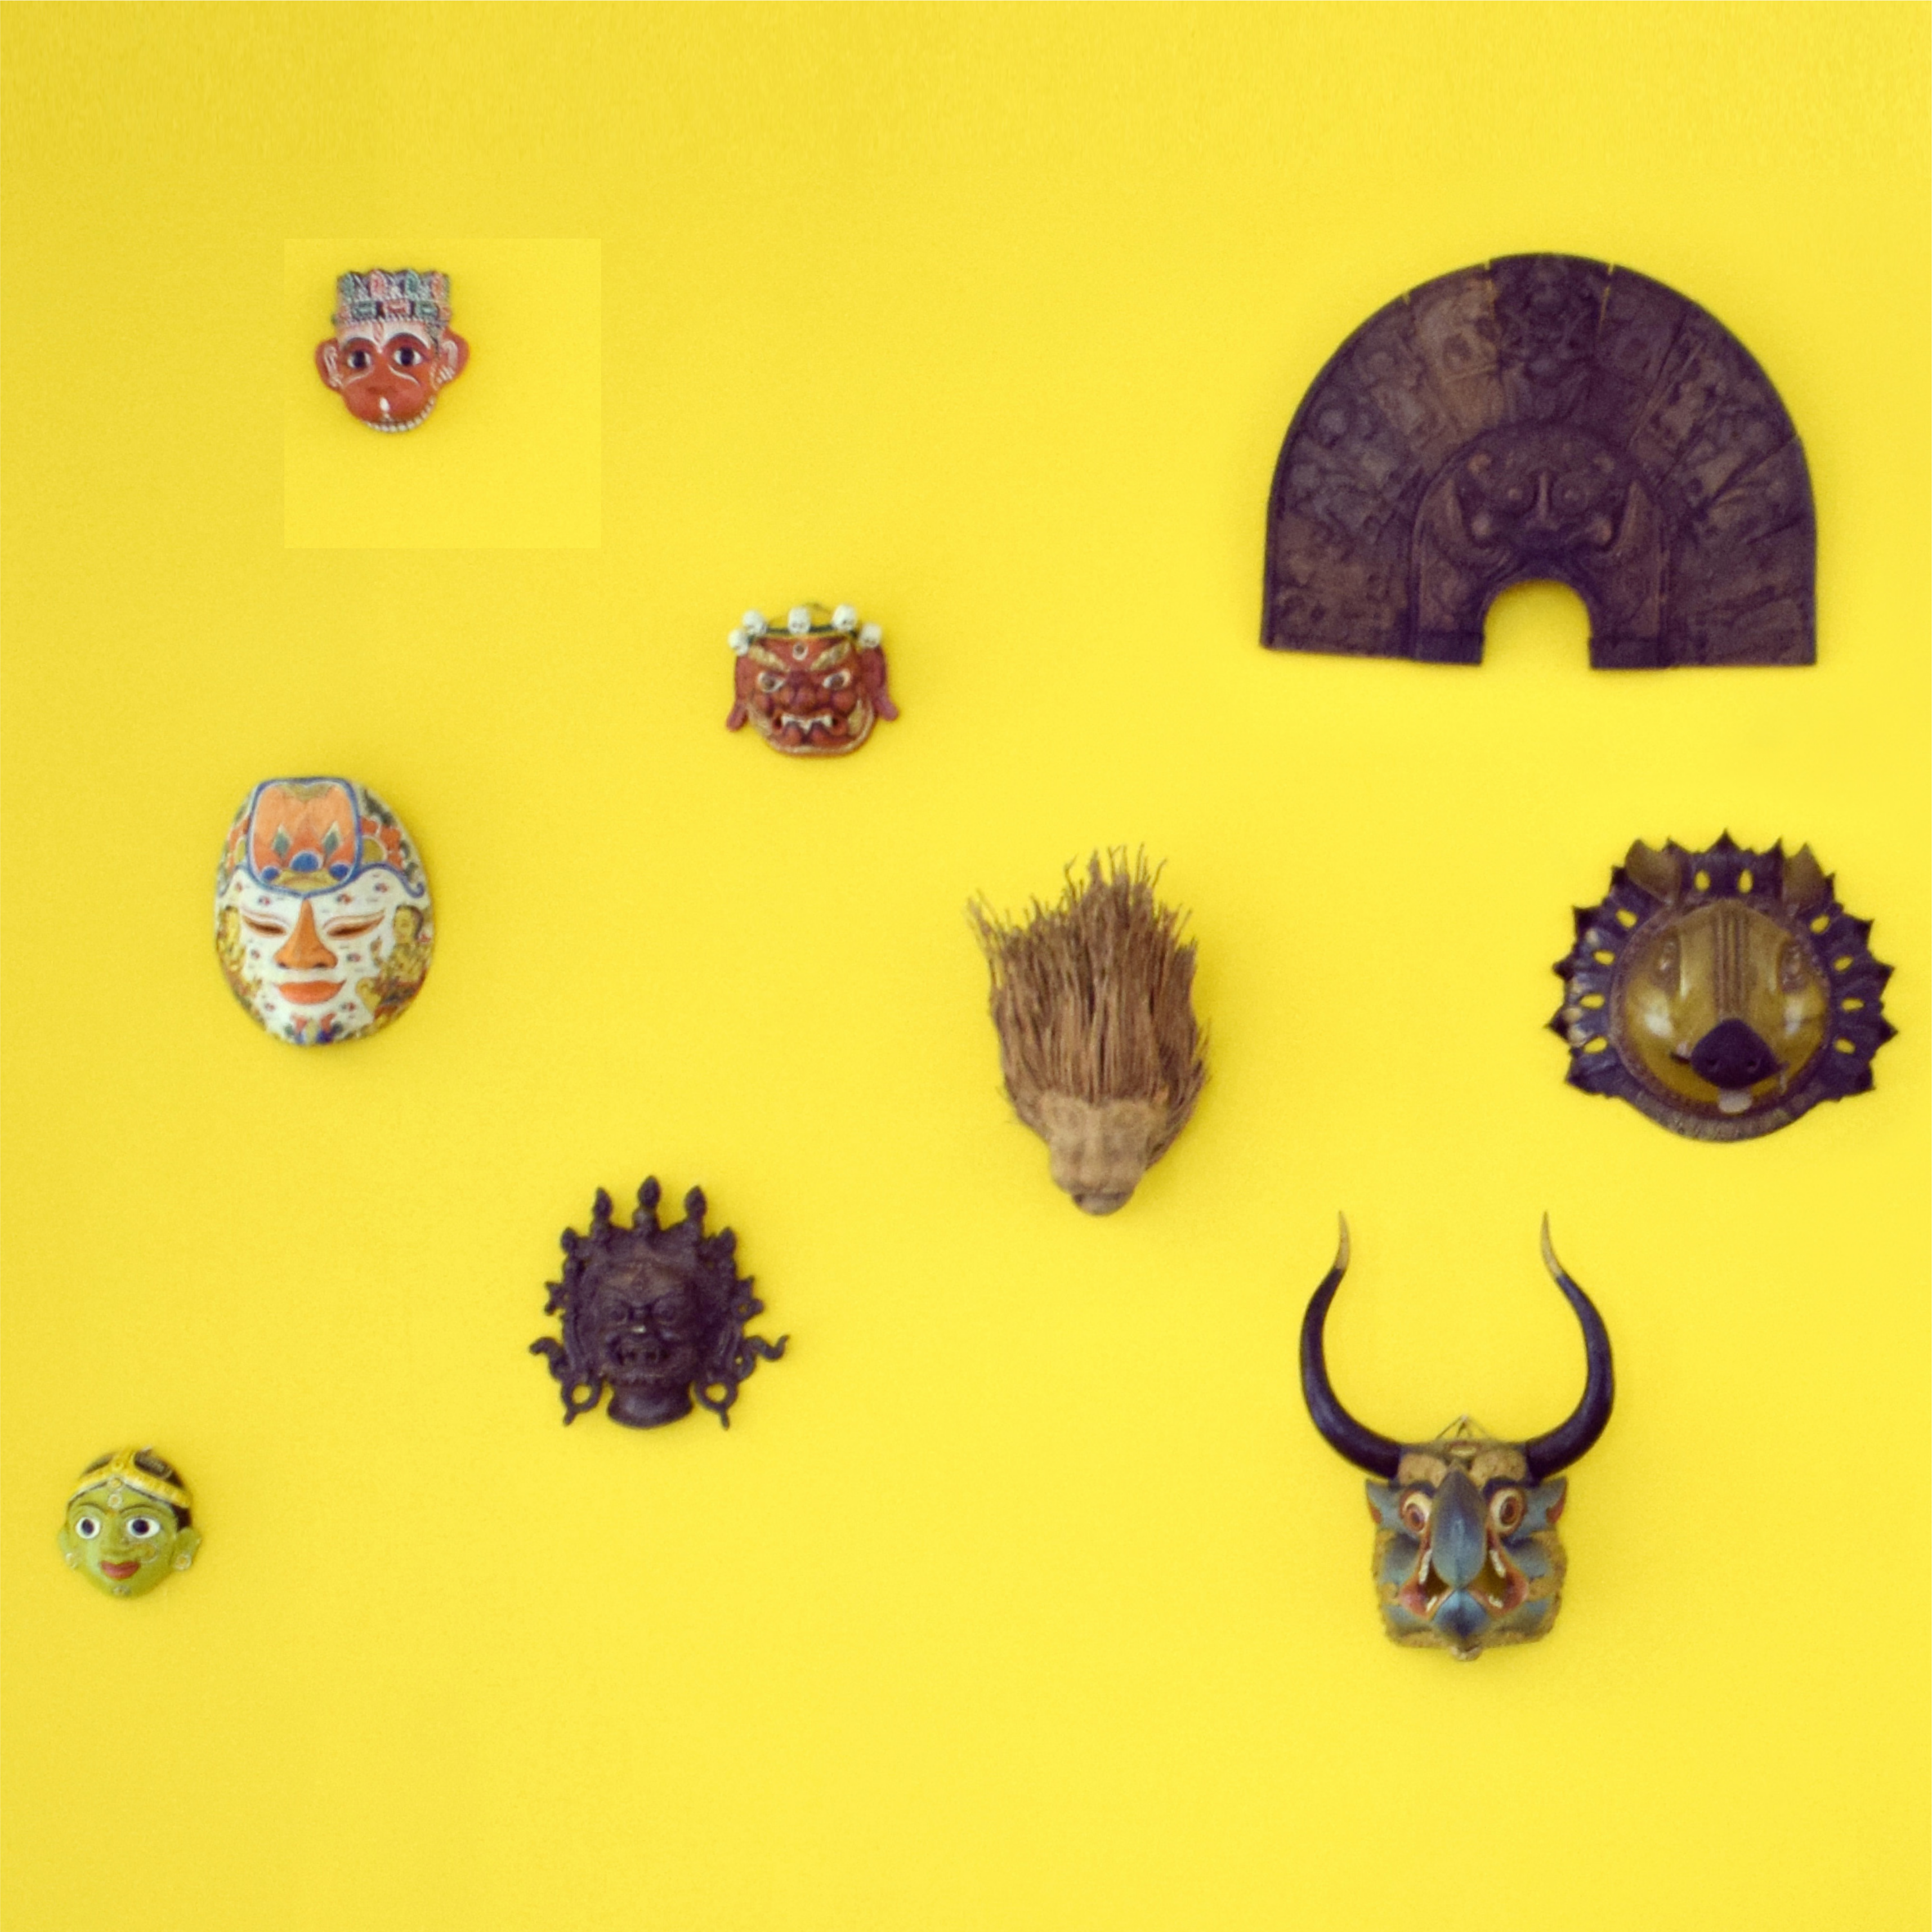 Mask, Wall decor mask, decoration, wooden